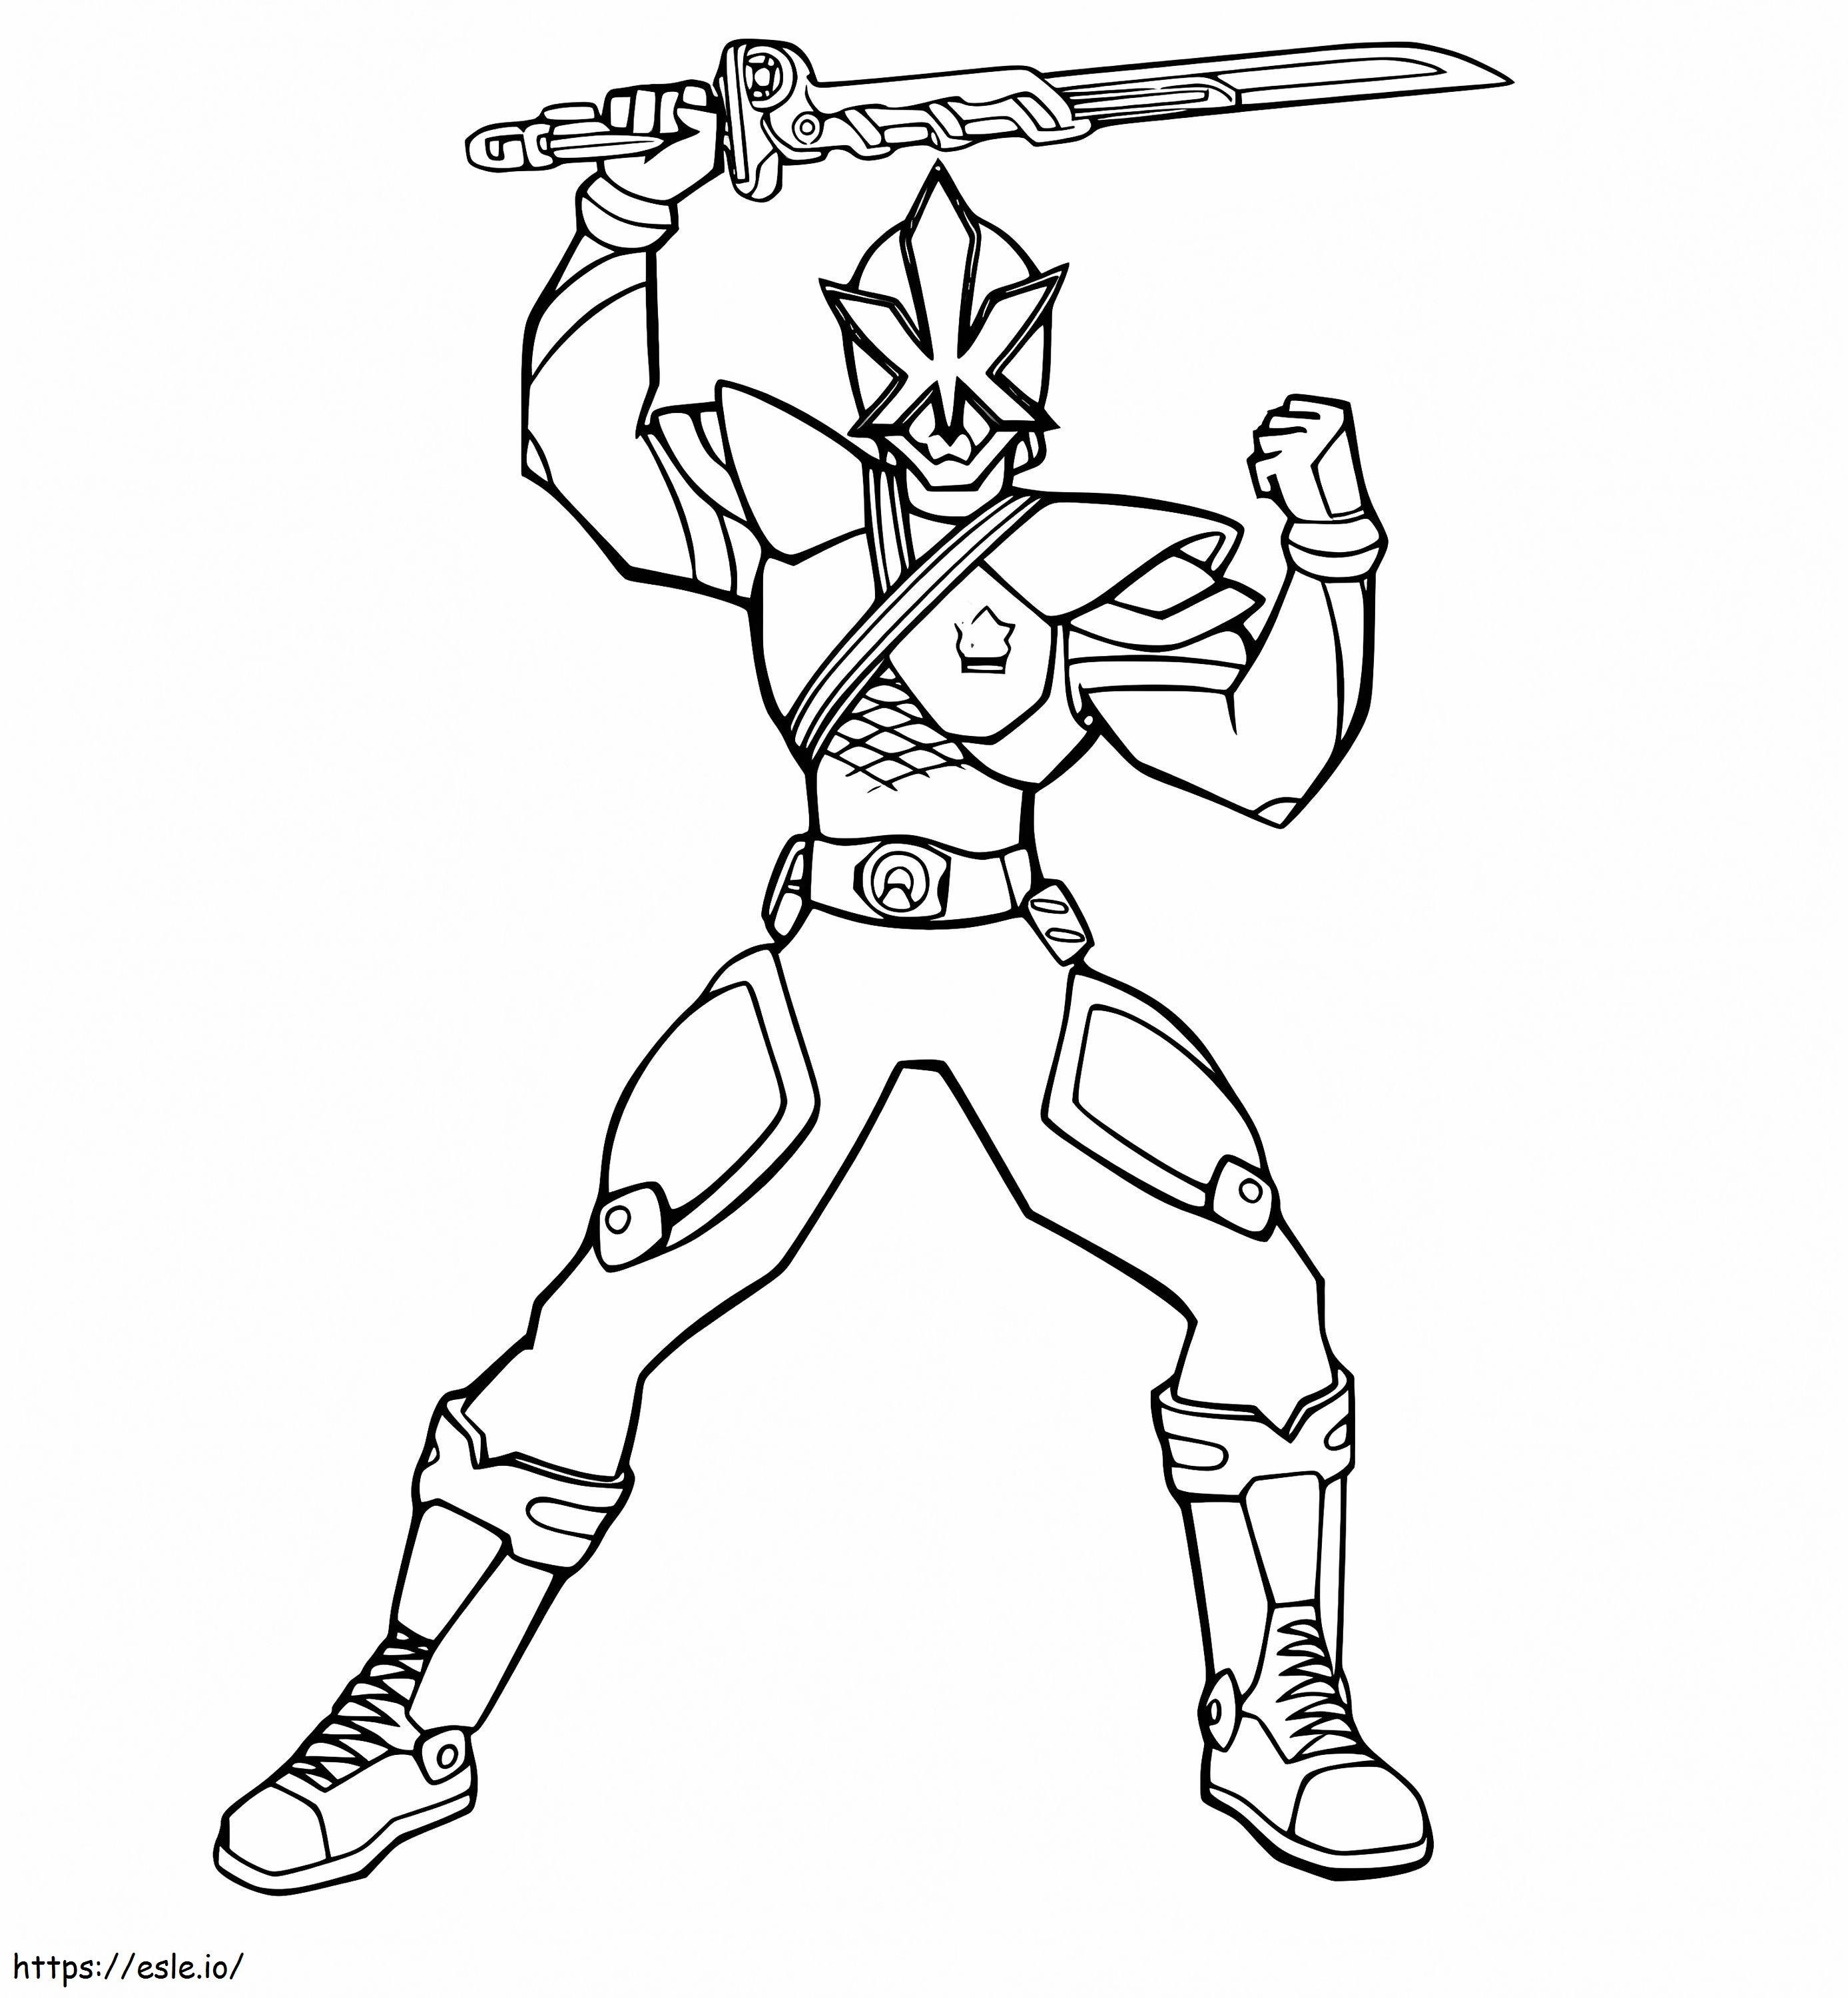 Kevin Blue Samurai Ranger coloring page